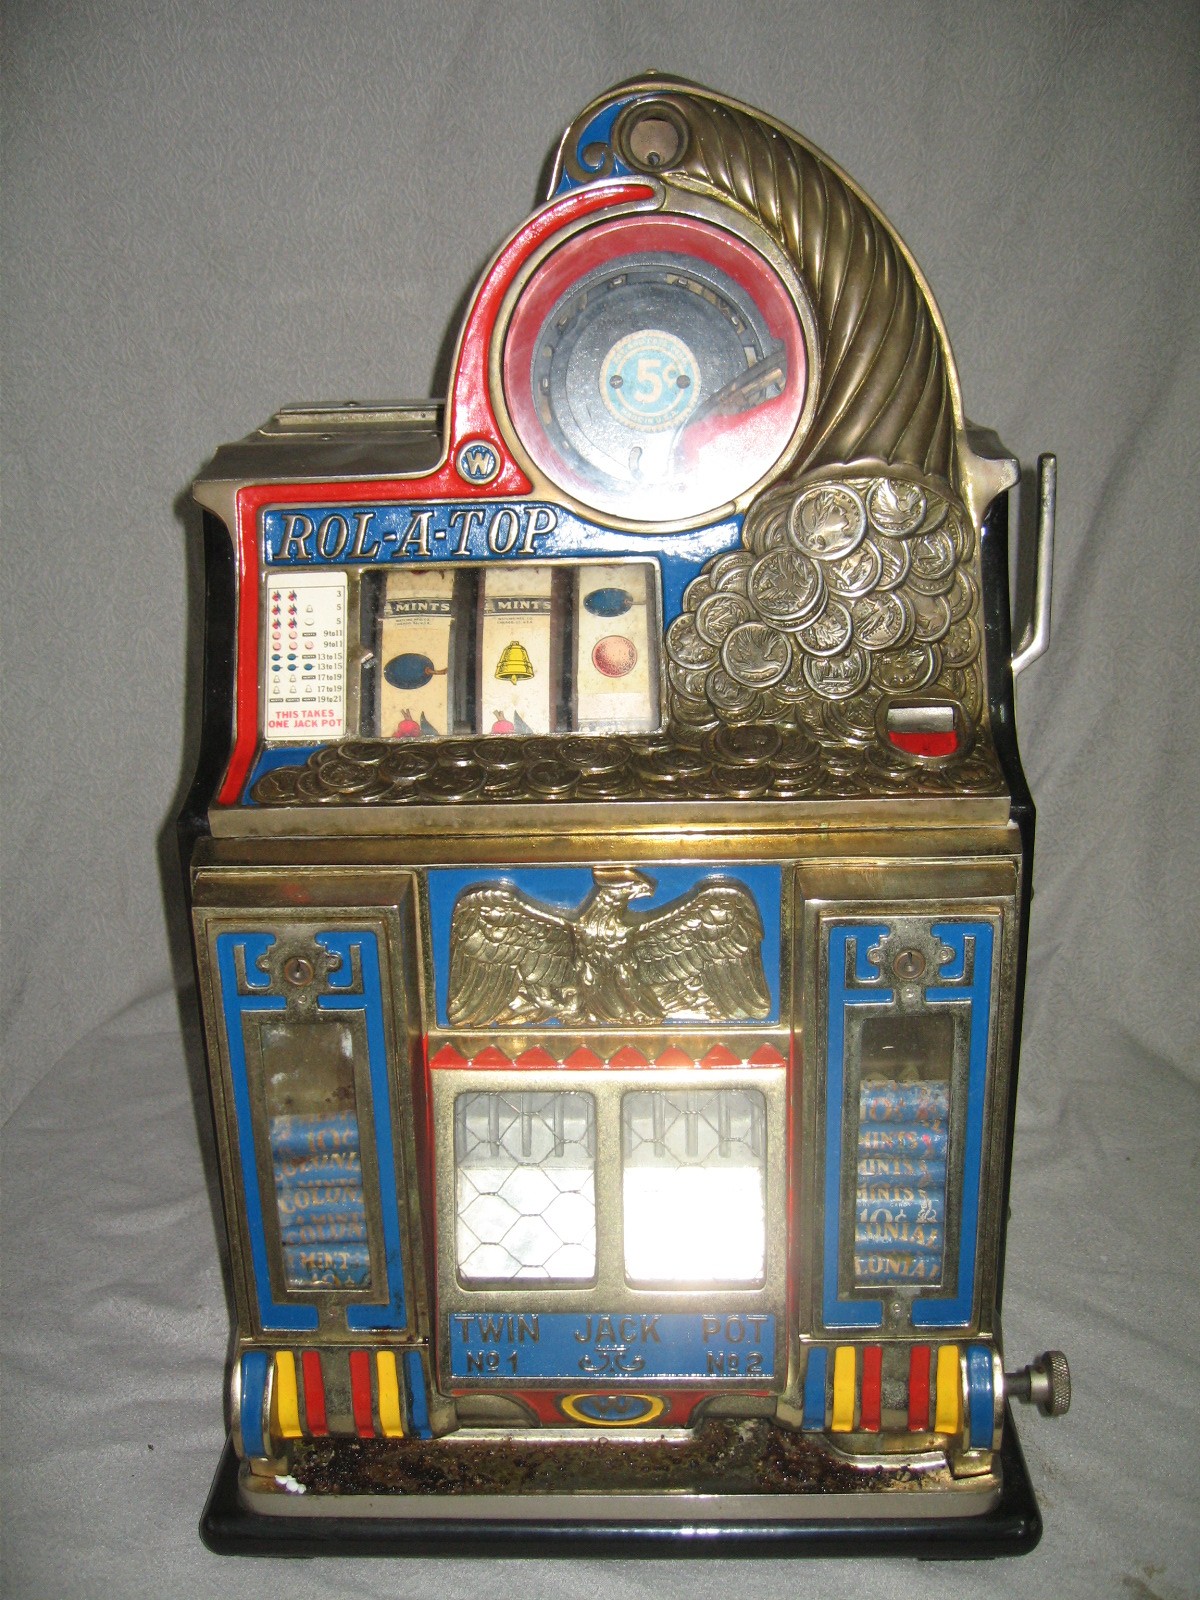 Penny slot machine wins